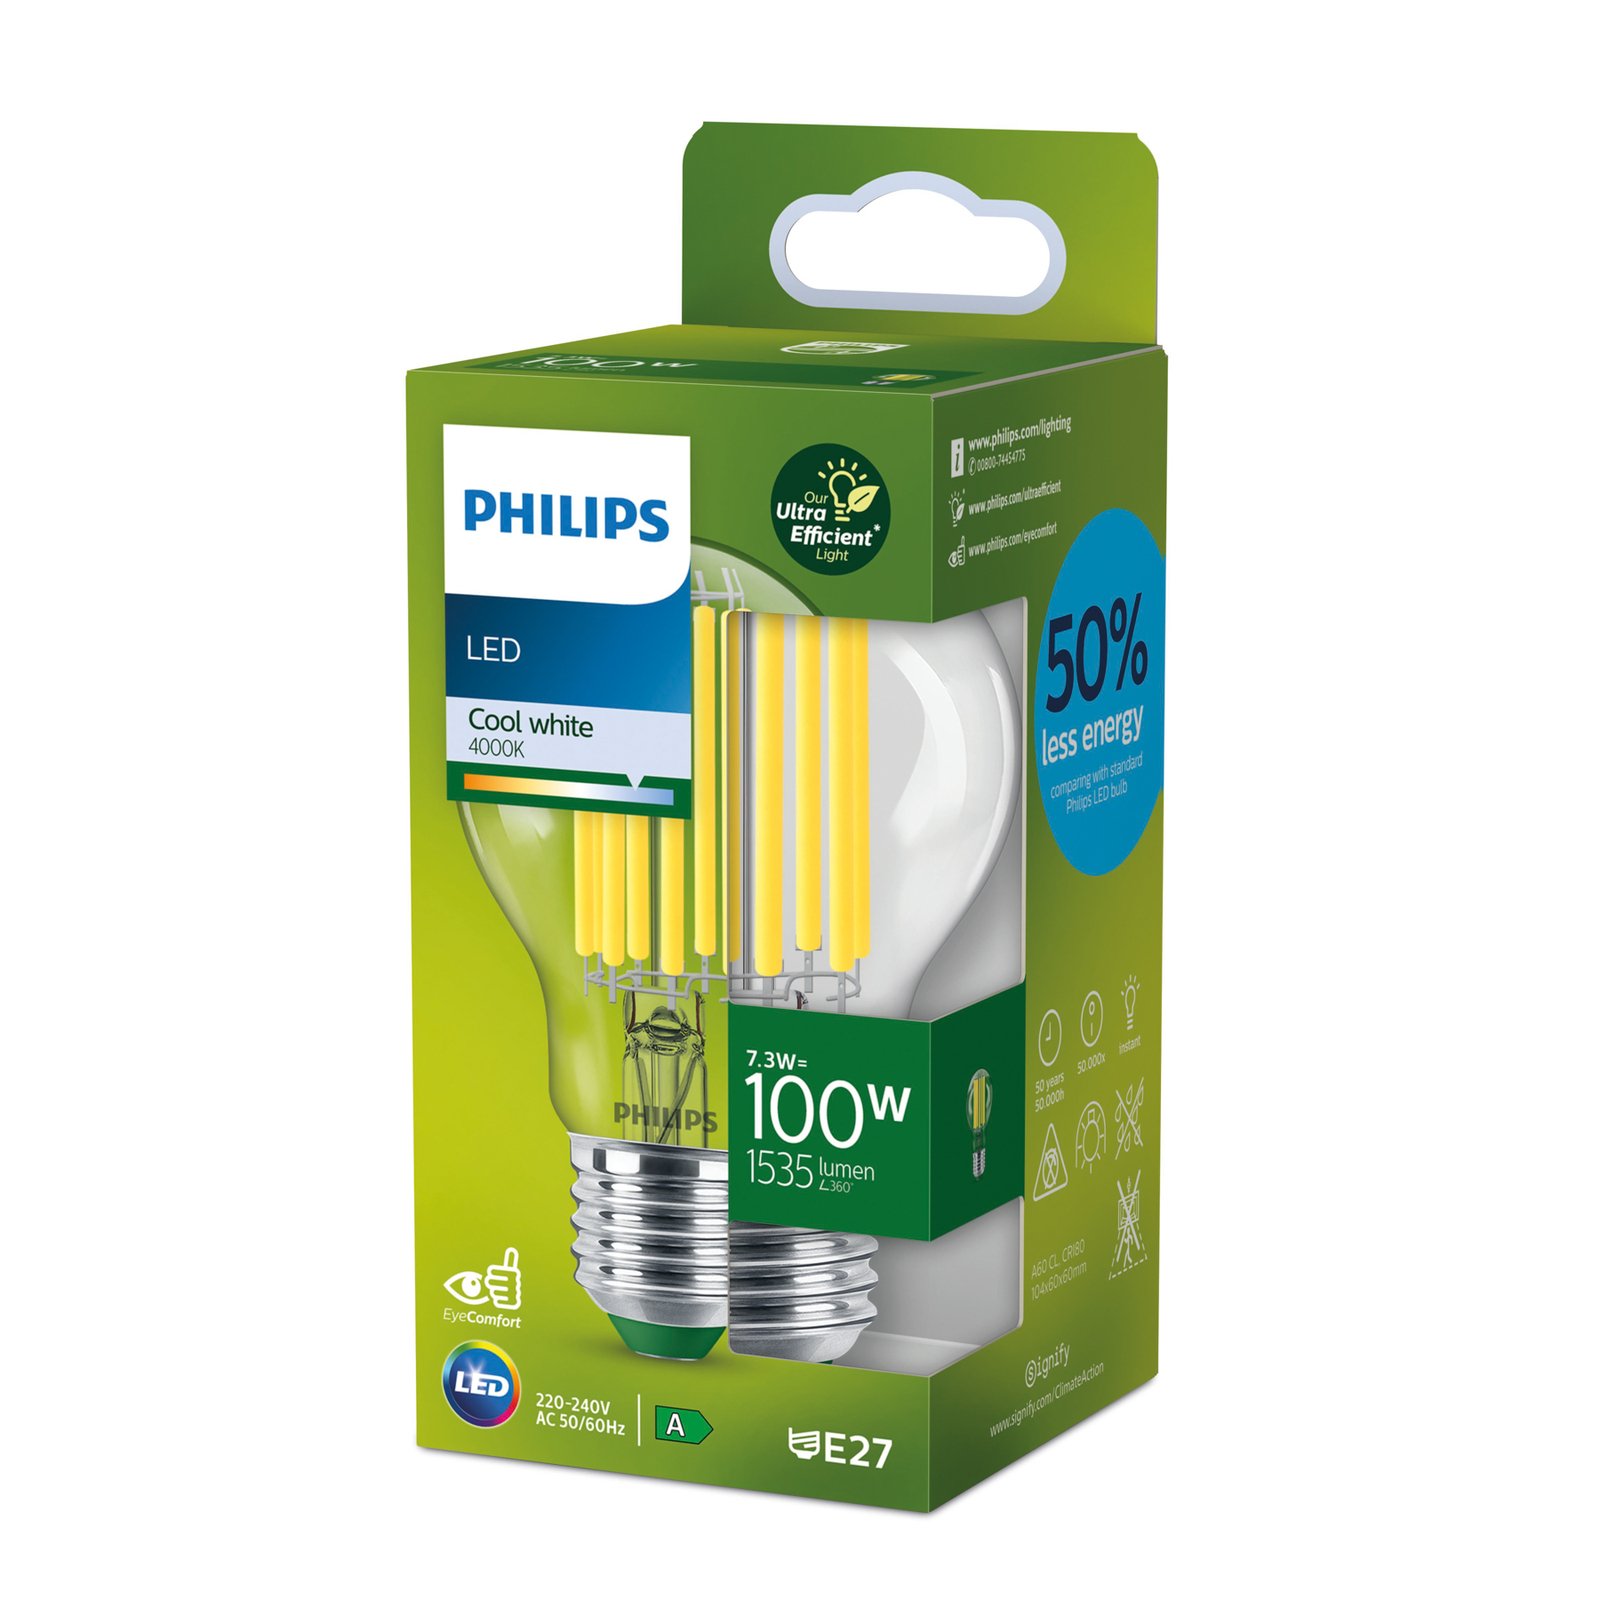 Philips E27 LED lamp A60 7,3W 1535lm 4.000K helder